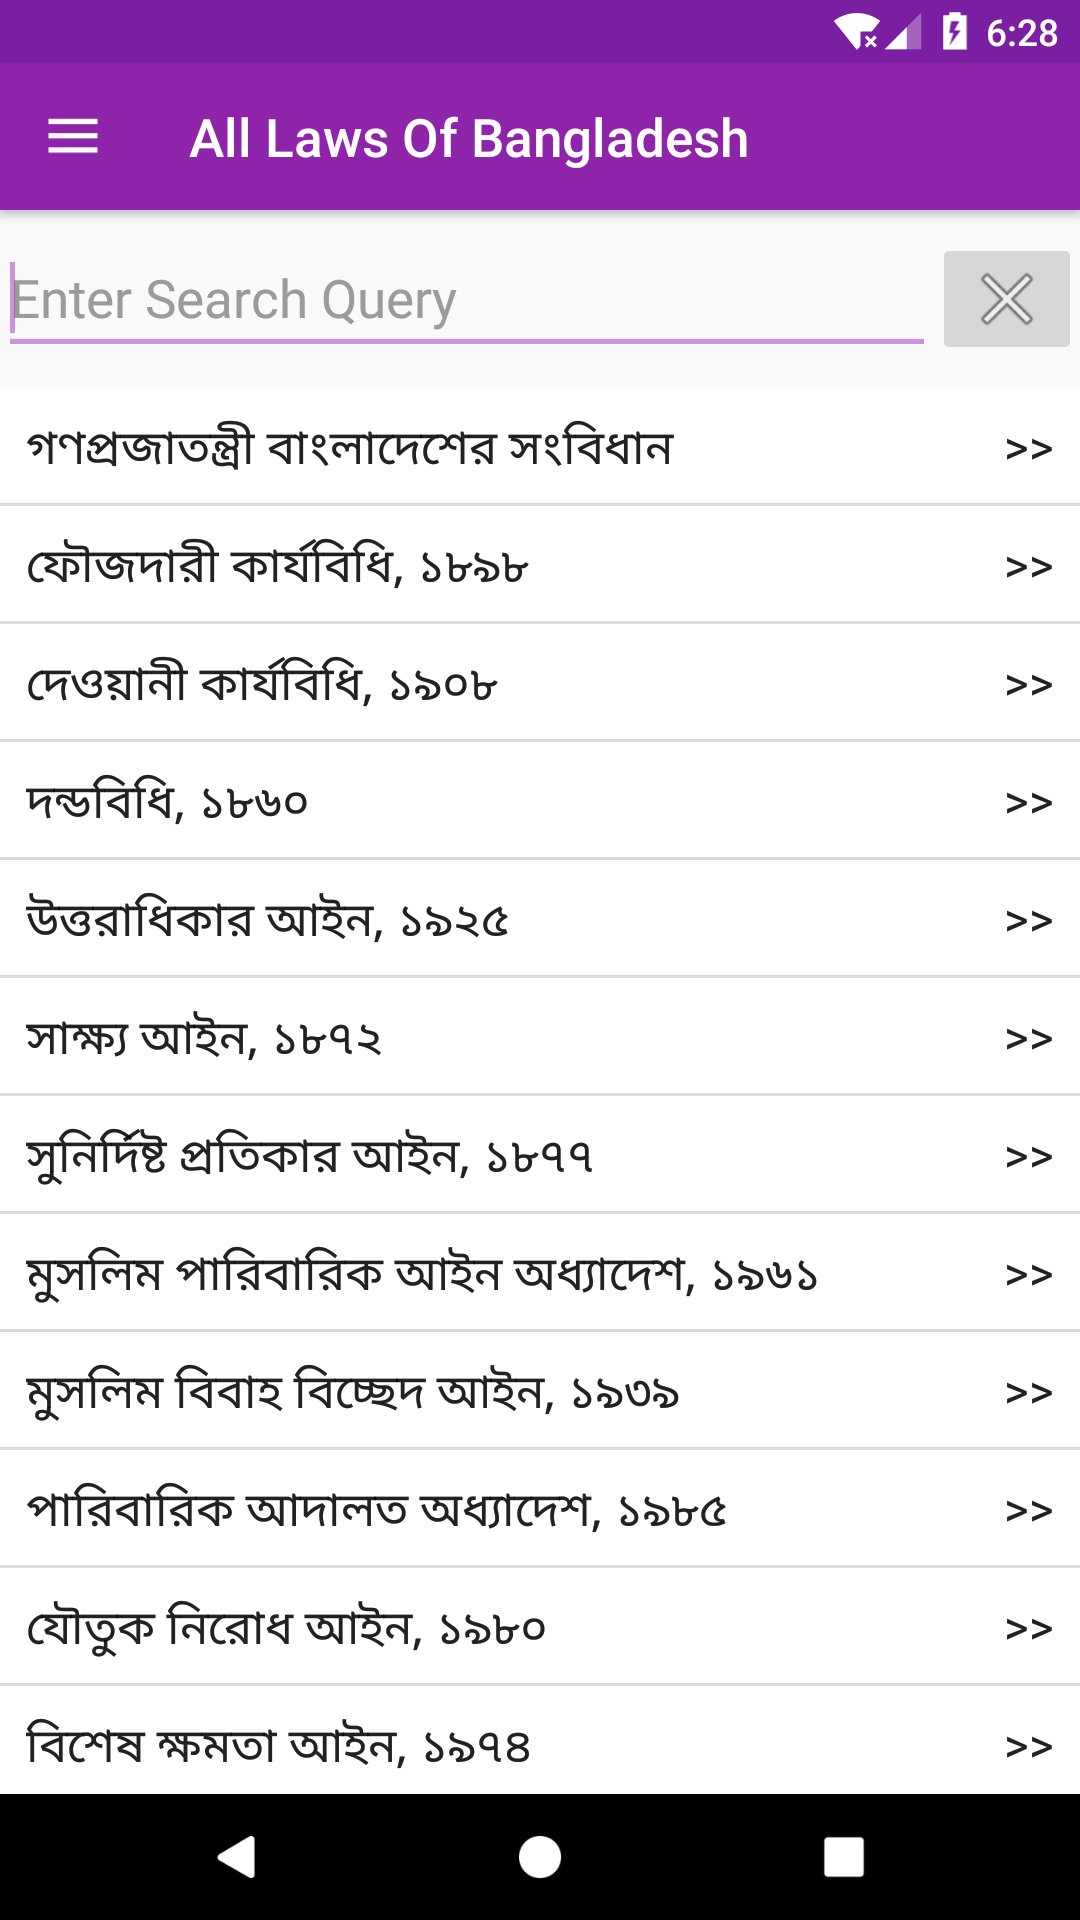 All Laws Of Bangladesh